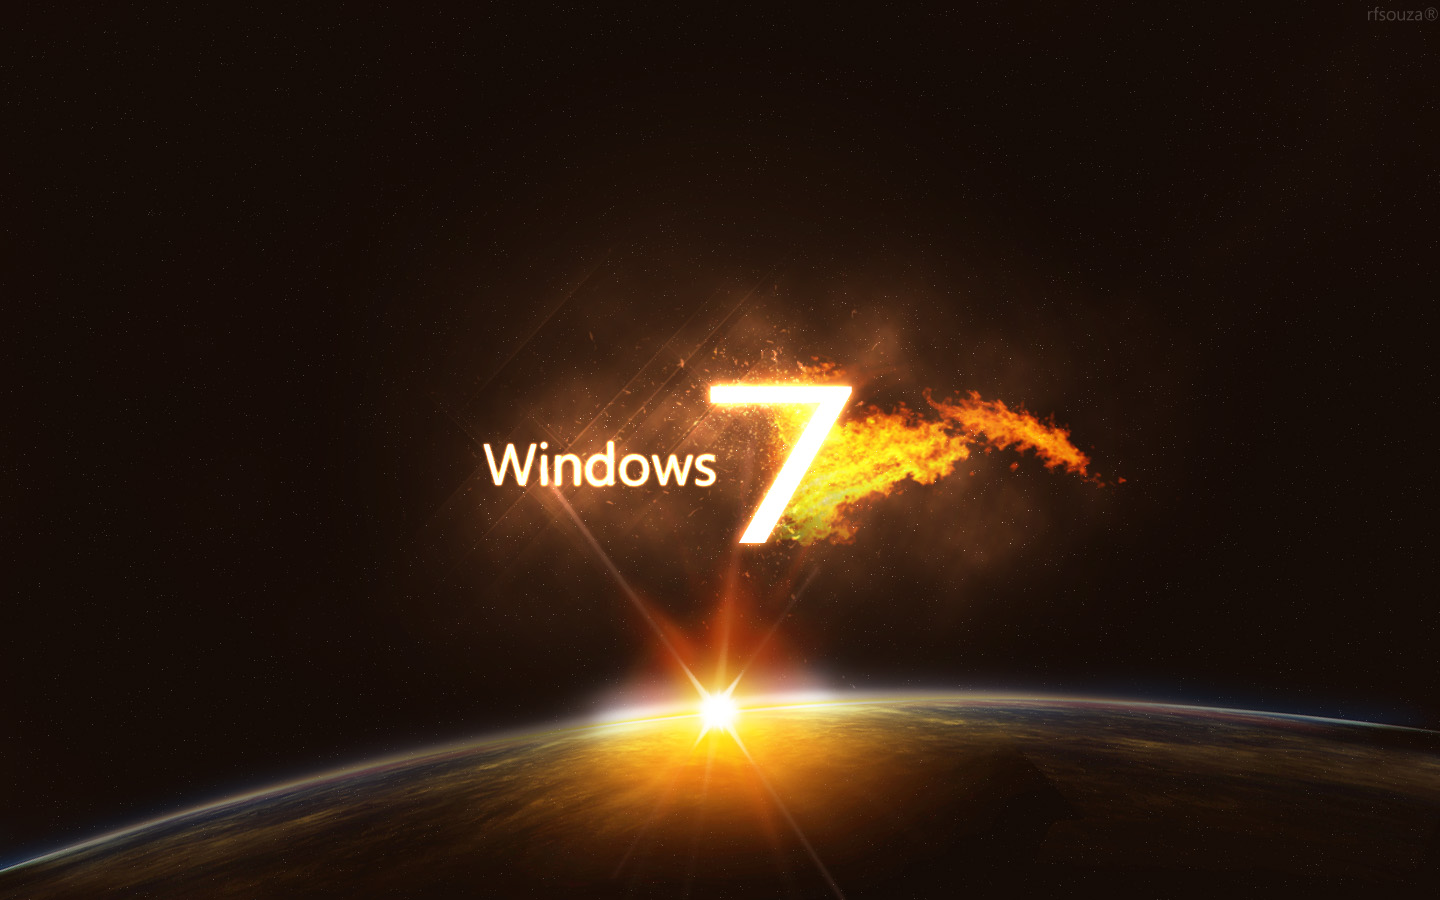 DEADHEART blog's zone: Windows 7 Dark Edition 2 SP1 x64 Prince NRVL